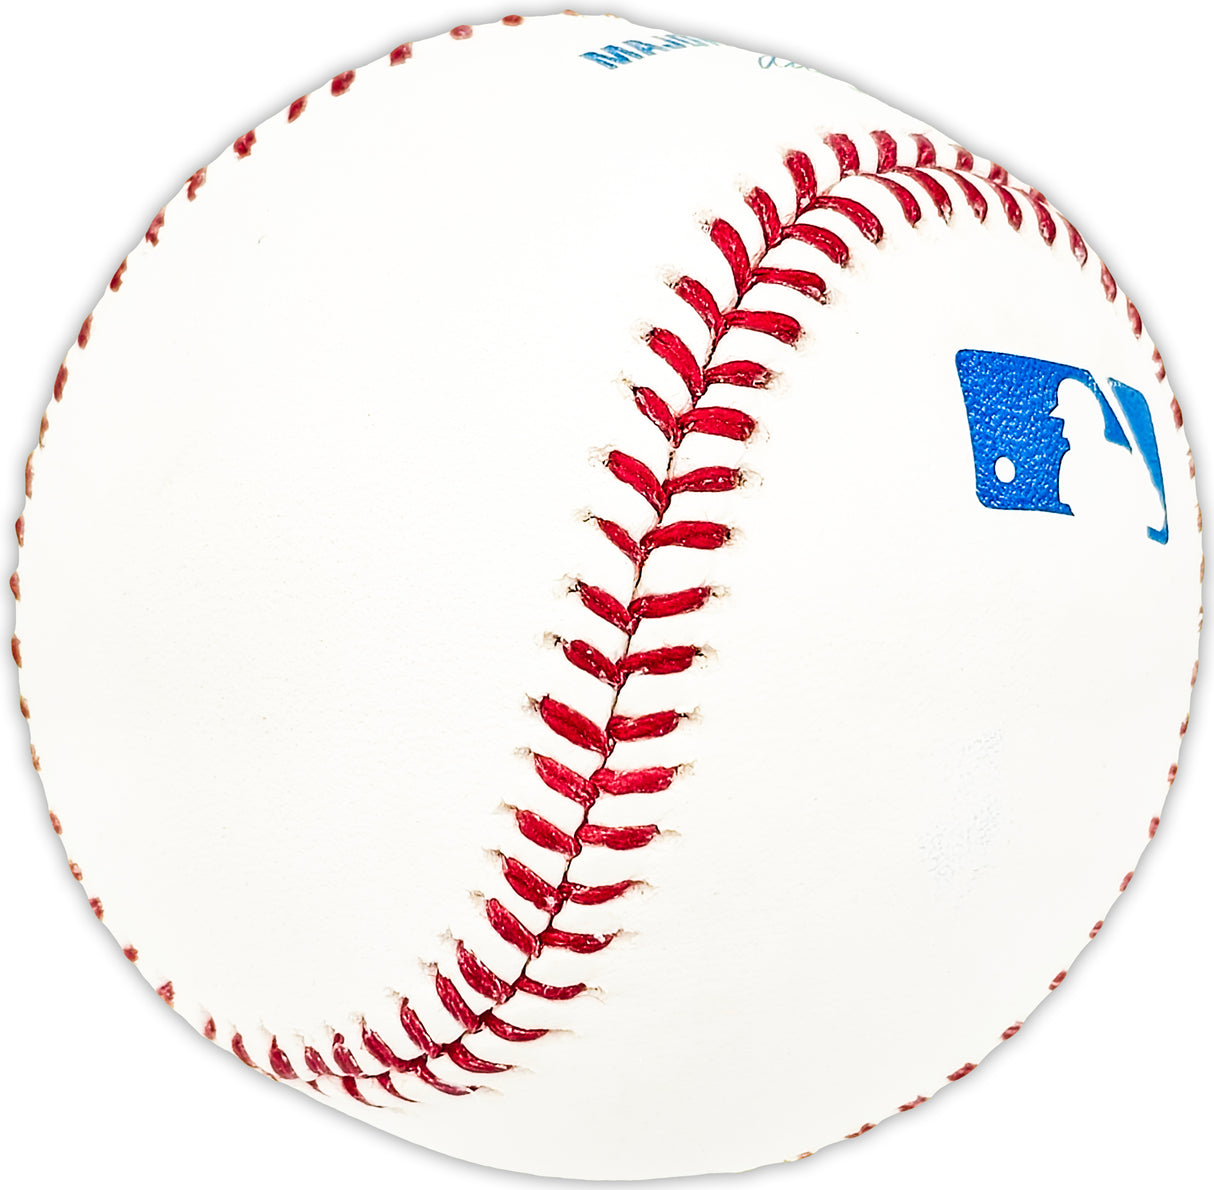 Al Raffo Autographed Official MLB Baseball Philadelphia Phillies Beckett BAS QR #BM25018